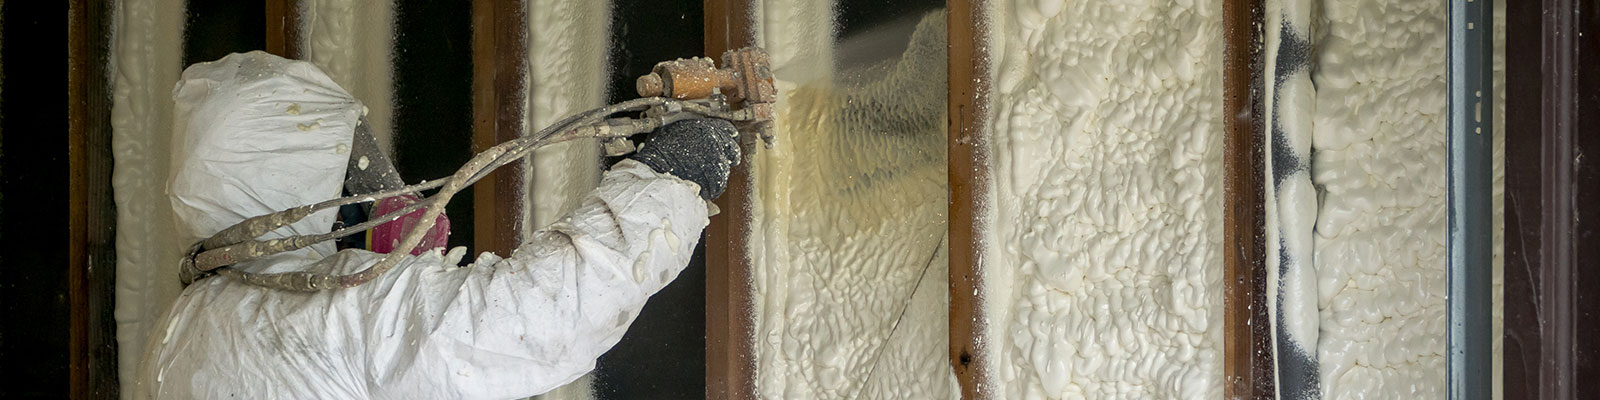 Adding spray insulation between studs inside a home